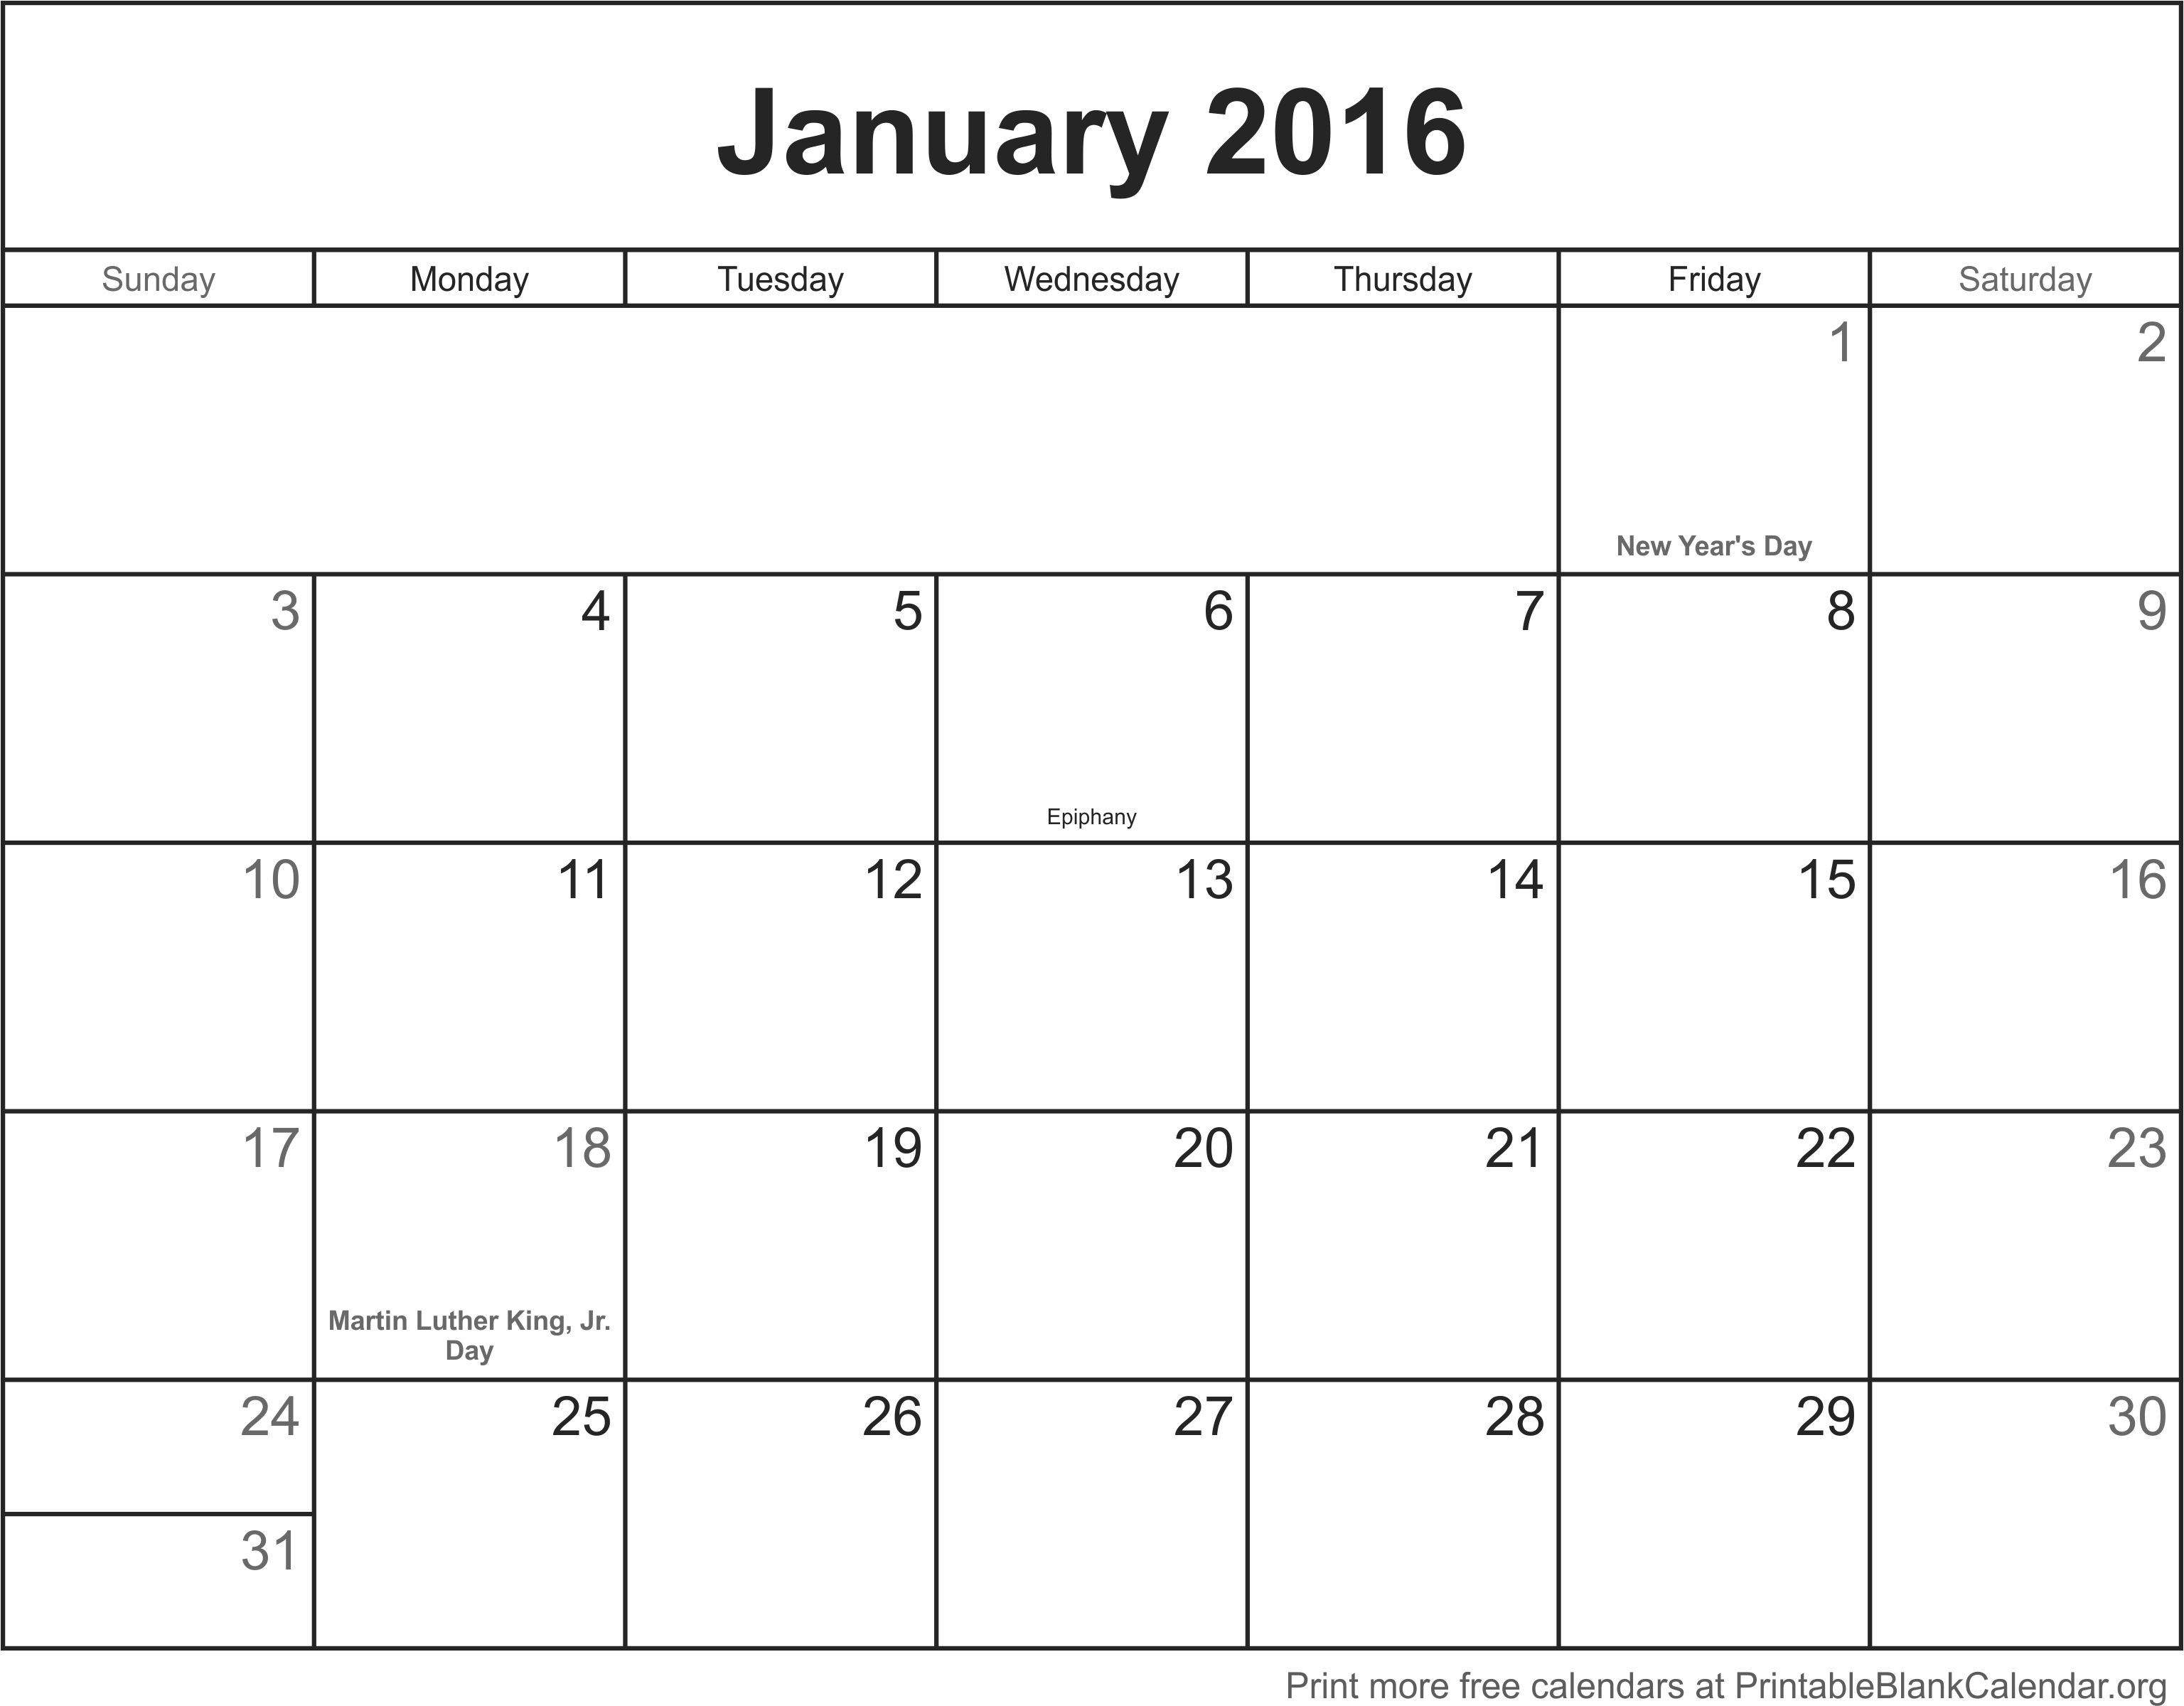 January 2016 Printable Calendar Printable Blank Calendar.org